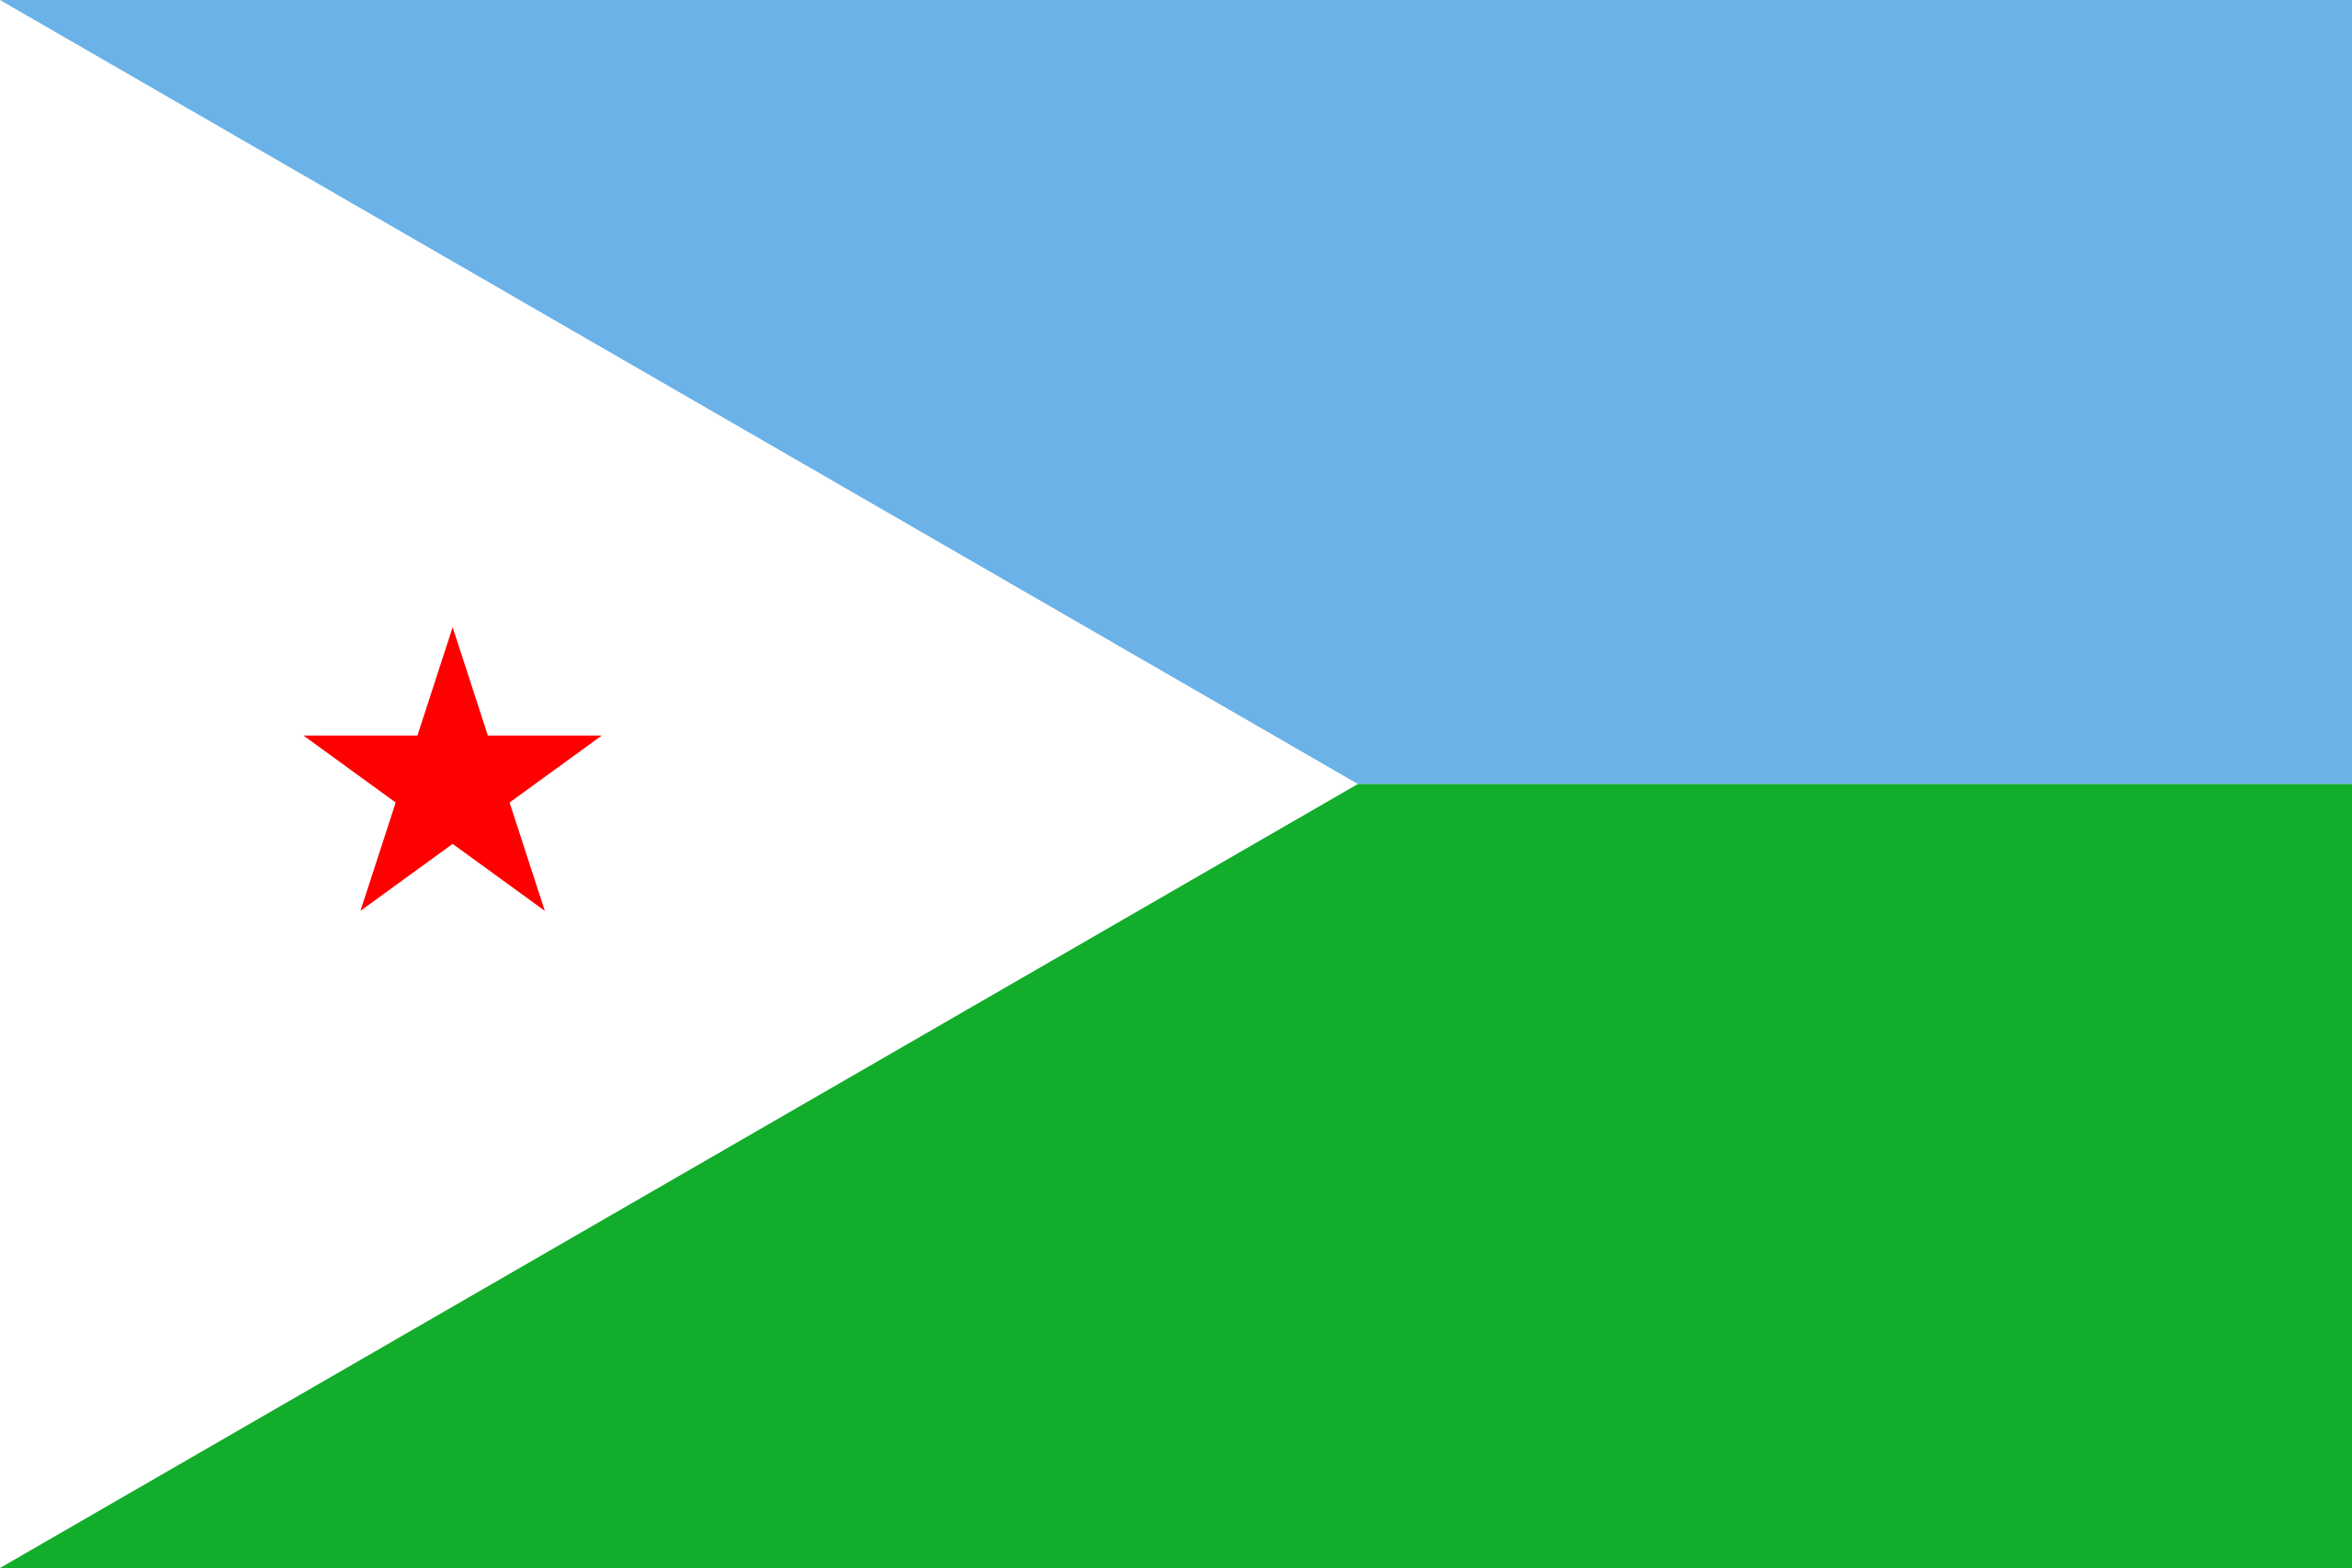 Djibouti's flag